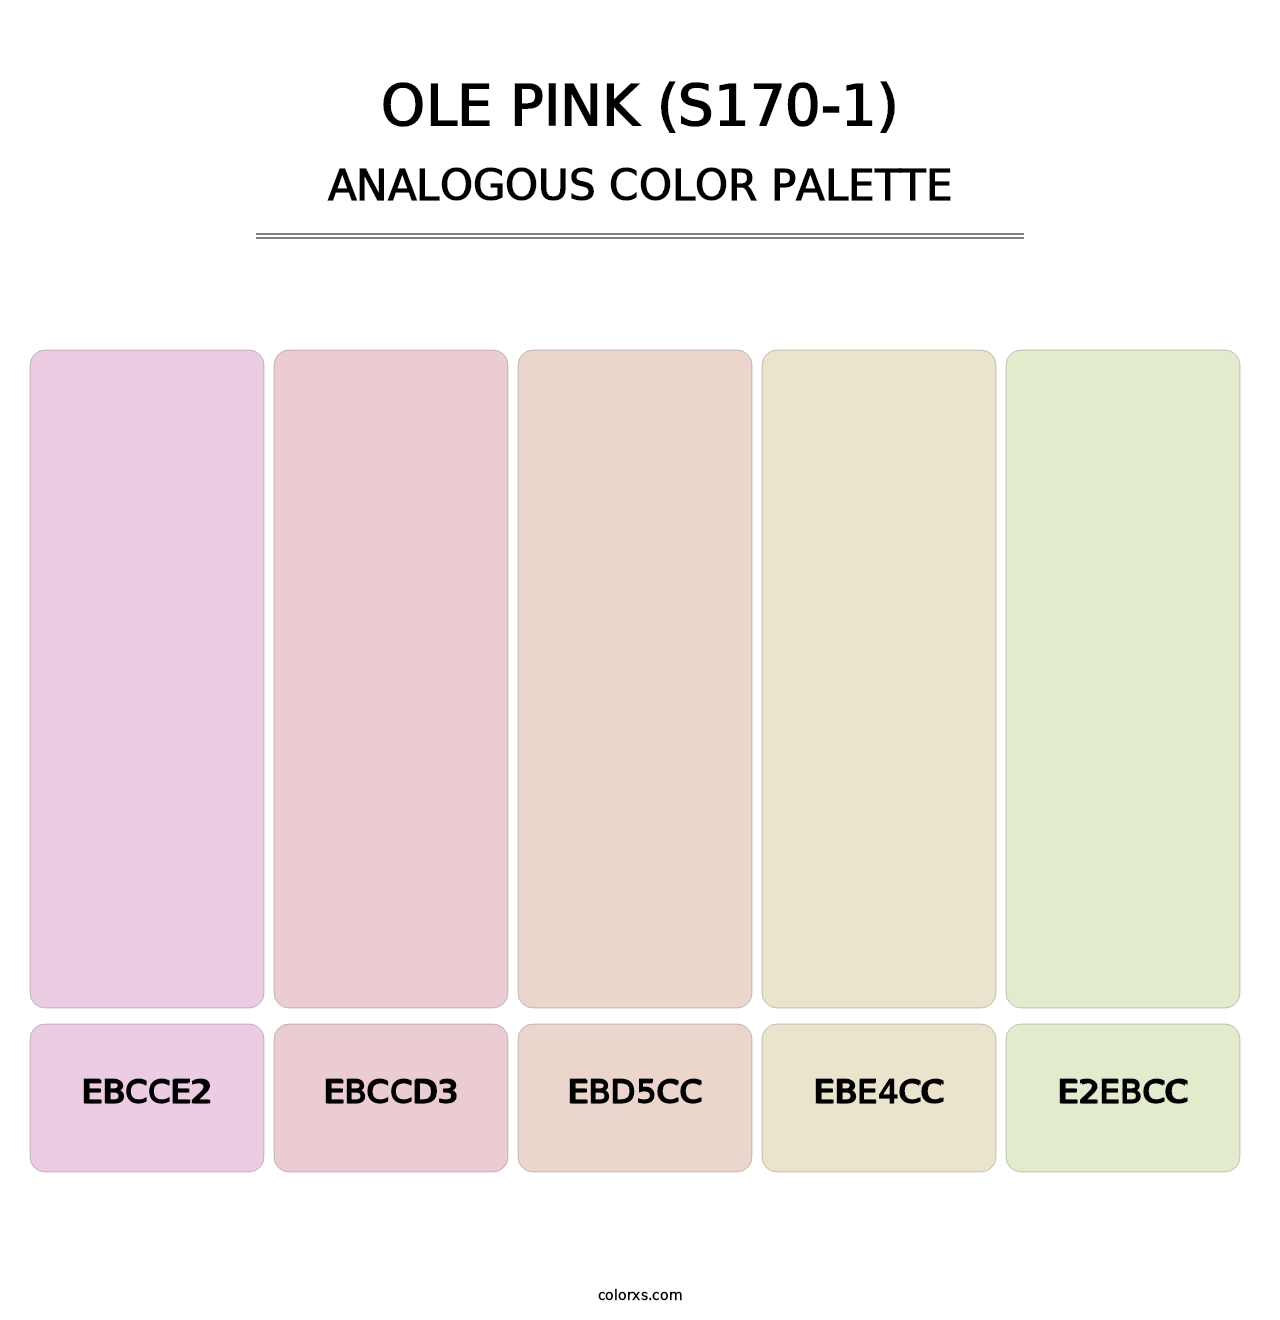 Ole Pink (S170-1) - Analogous Color Palette